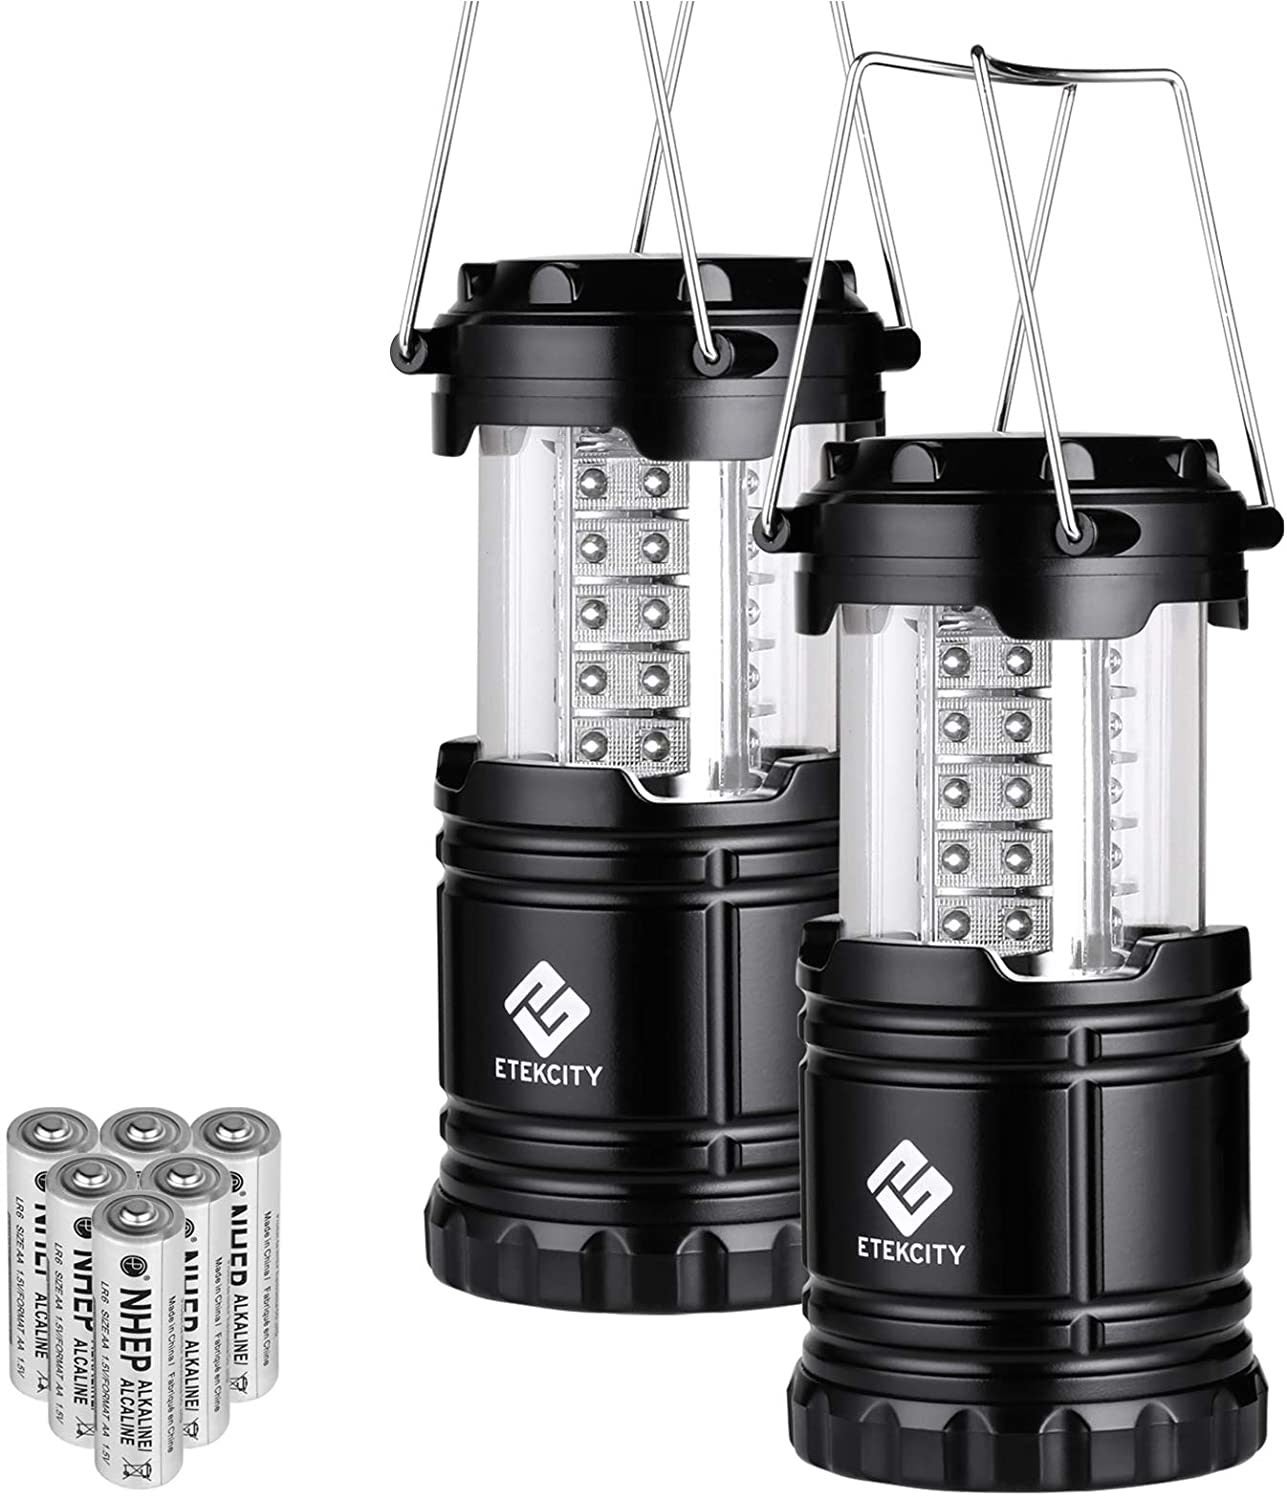 Etekcity LED Camping Lantern (4-pack) is on sale at